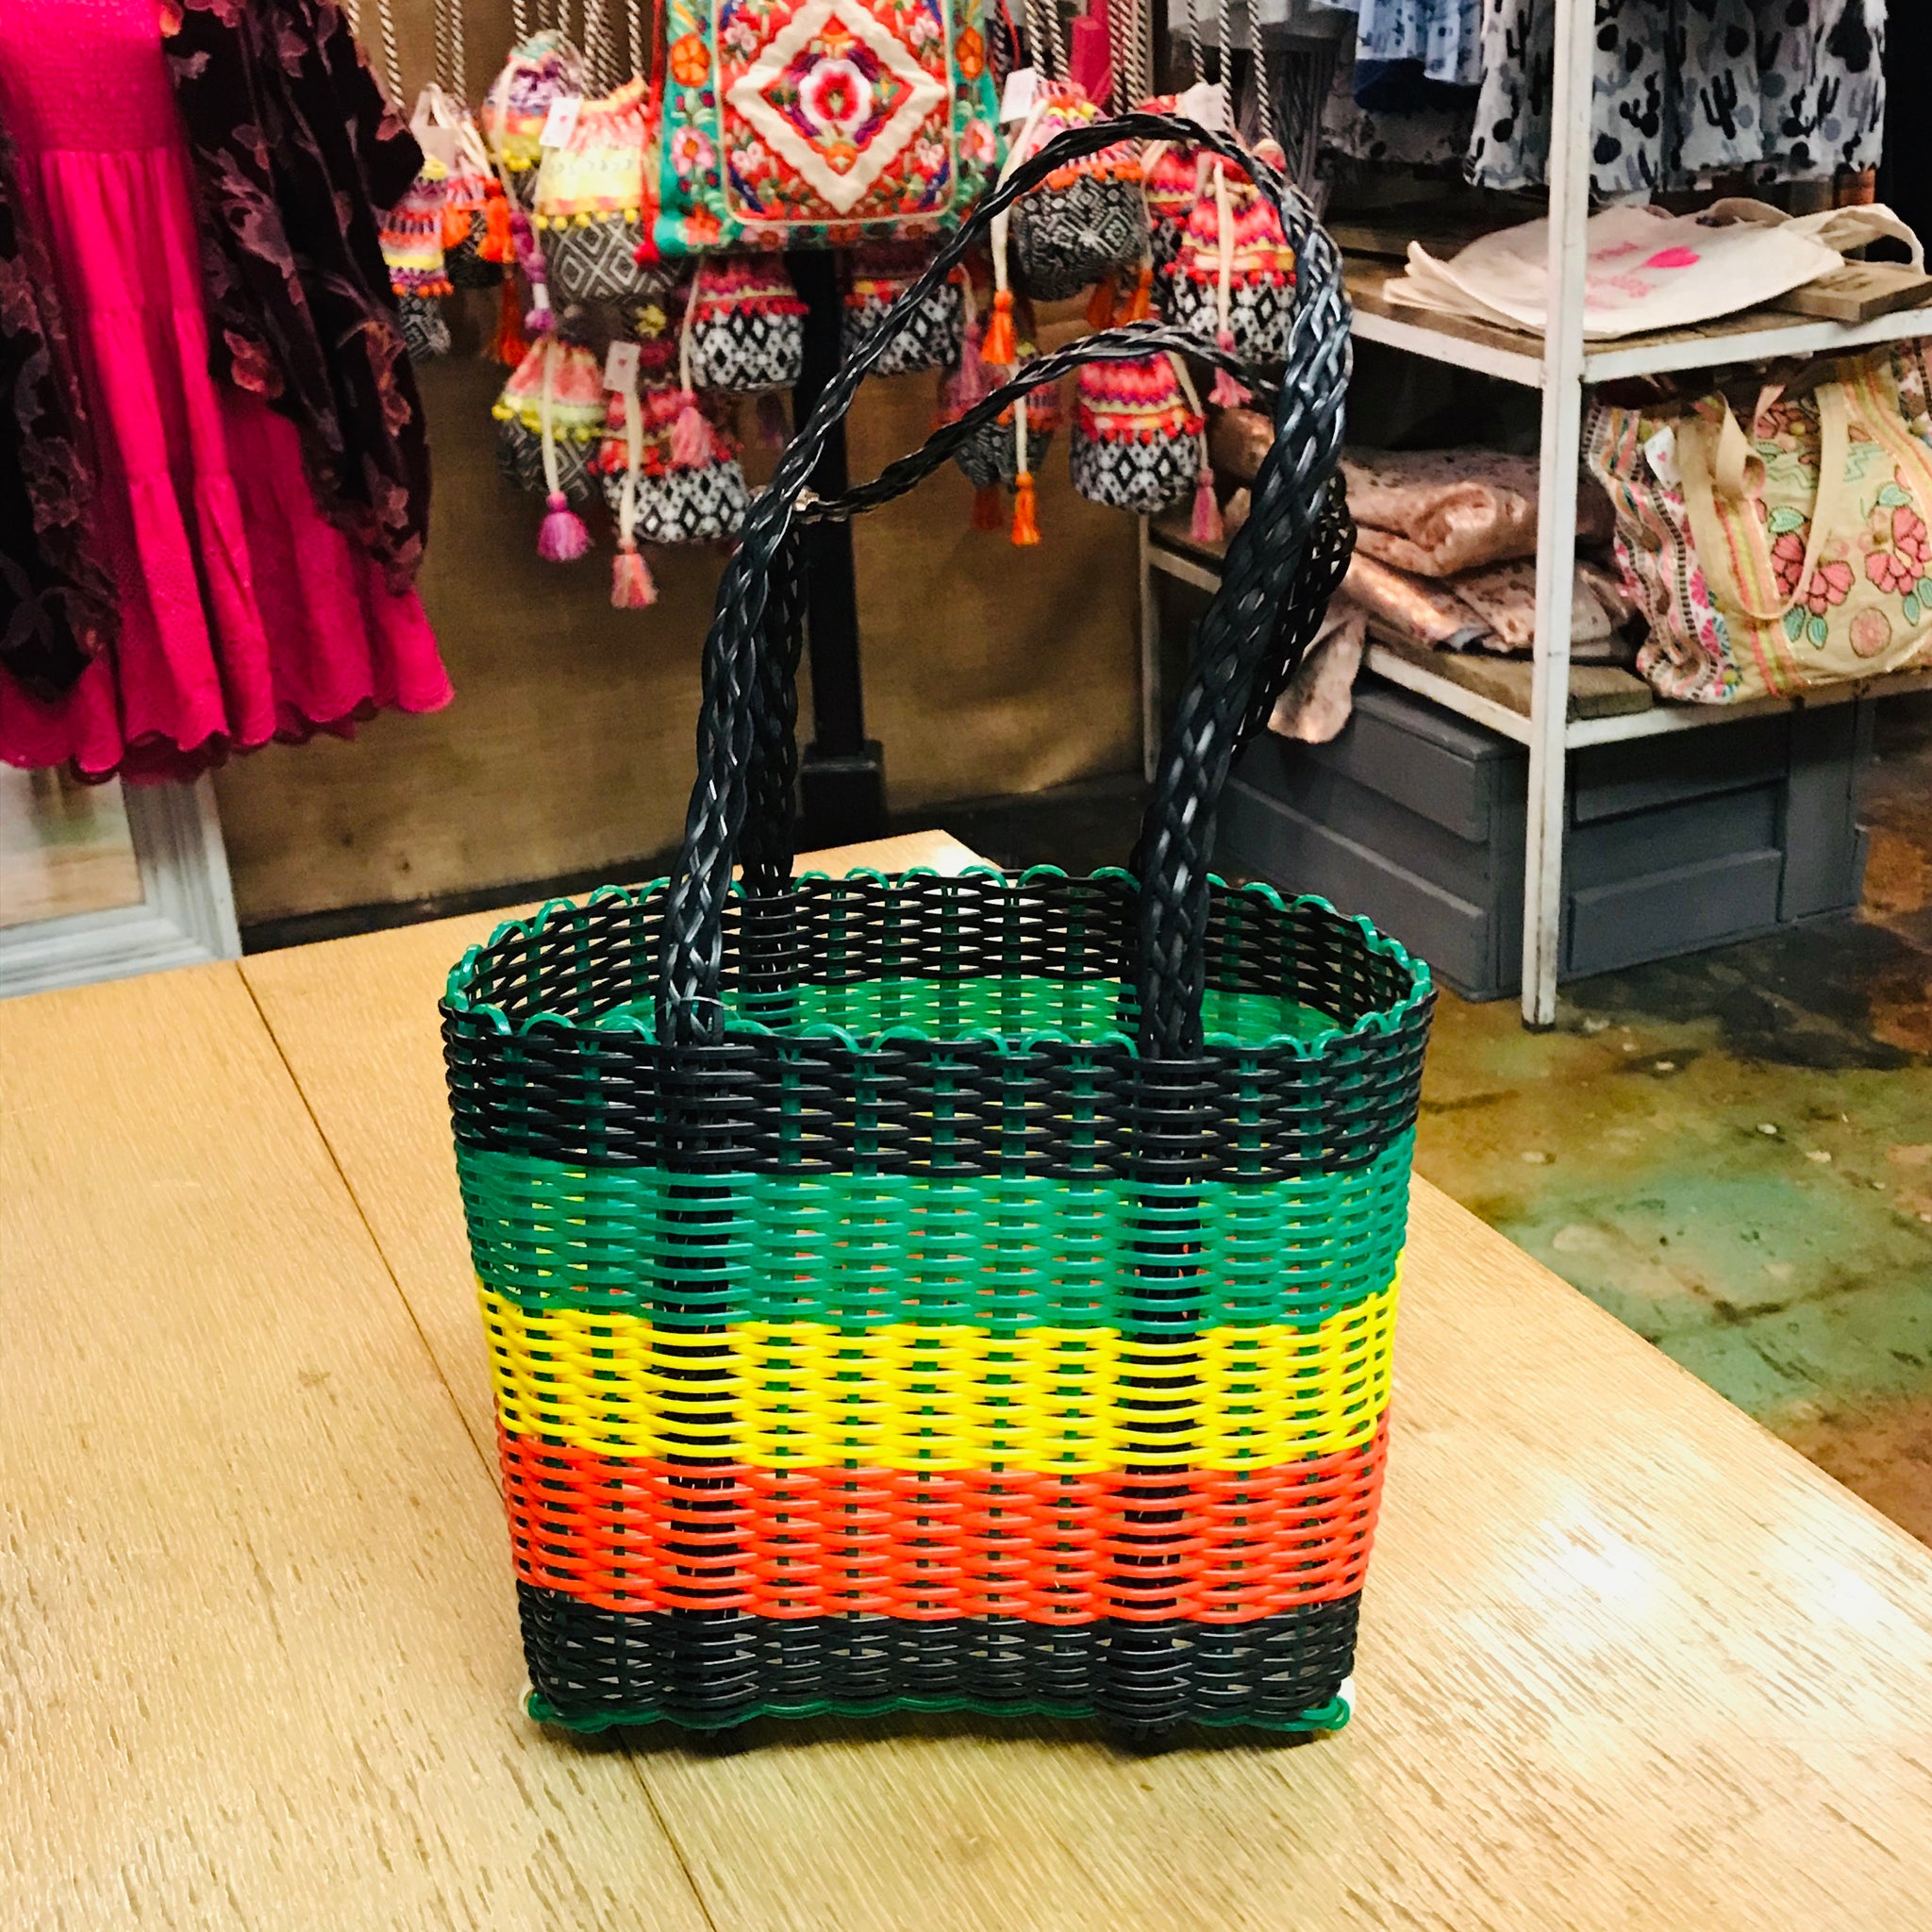 Fashionable Tote Bag, Handmade woven bag, Recycled Plastic, To-Go Bag,  Small Beach Bag, Market Bag, Chic/Boho Bag, Colorful Tote, SMALL Tote,  BRISLA